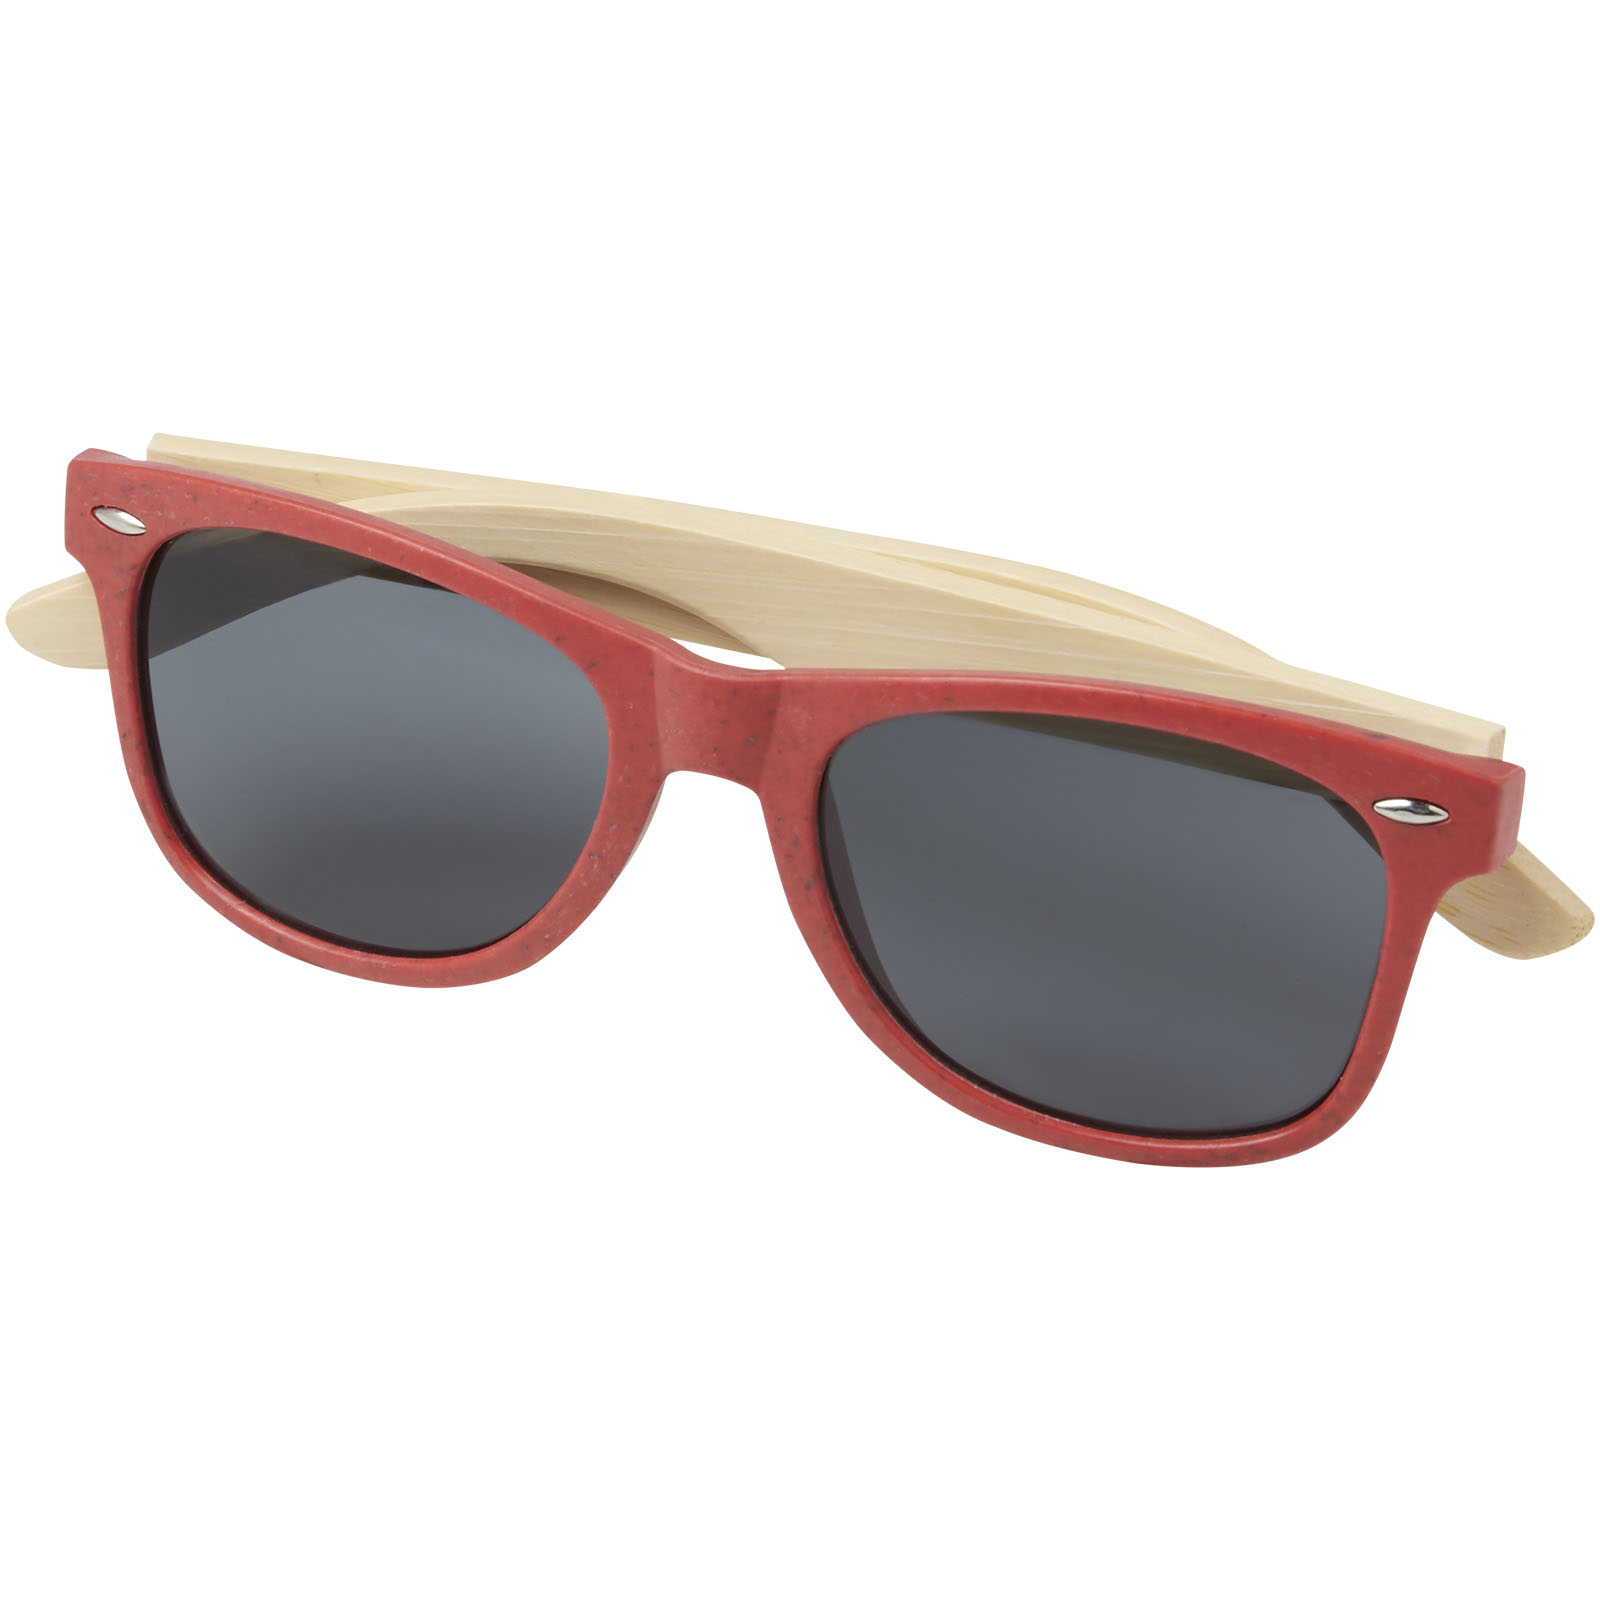 Advertising Sunglasses - Sun Ray bamboo sunglasses - 2